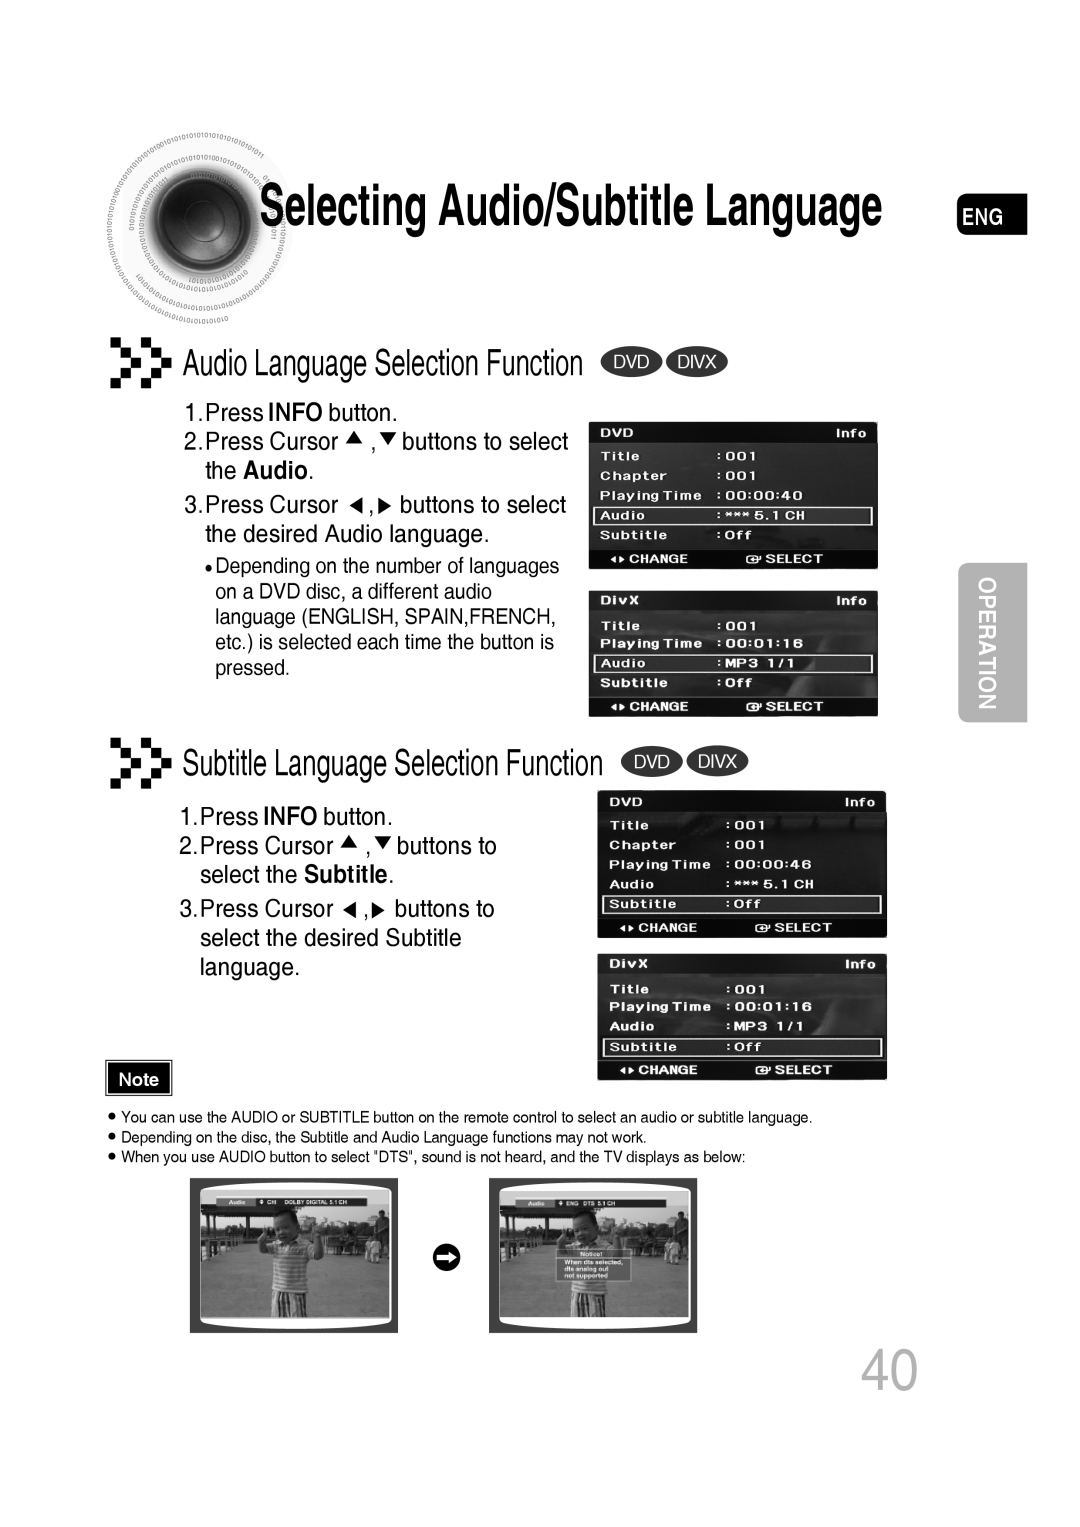 Samsung MM-C430D Audio Language Selection Function DVD DIVX, Subtitle Language Selection Function DVD DIVX, Operation 